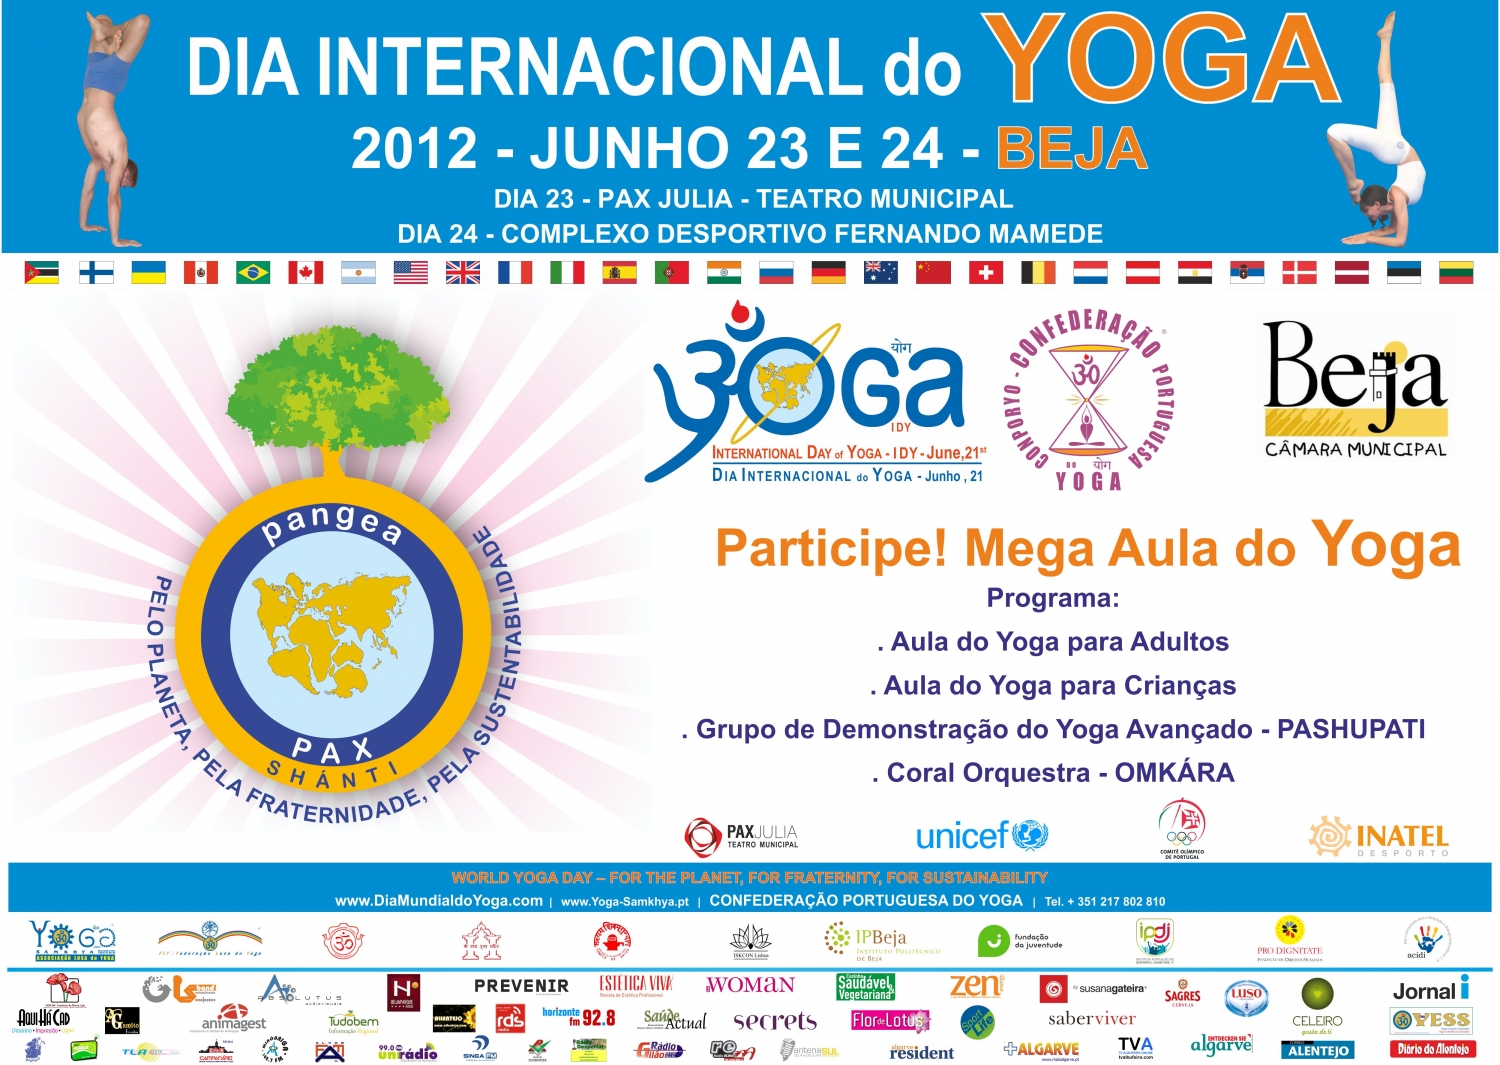 International Day of Yoga - IDY - 2012, Beja